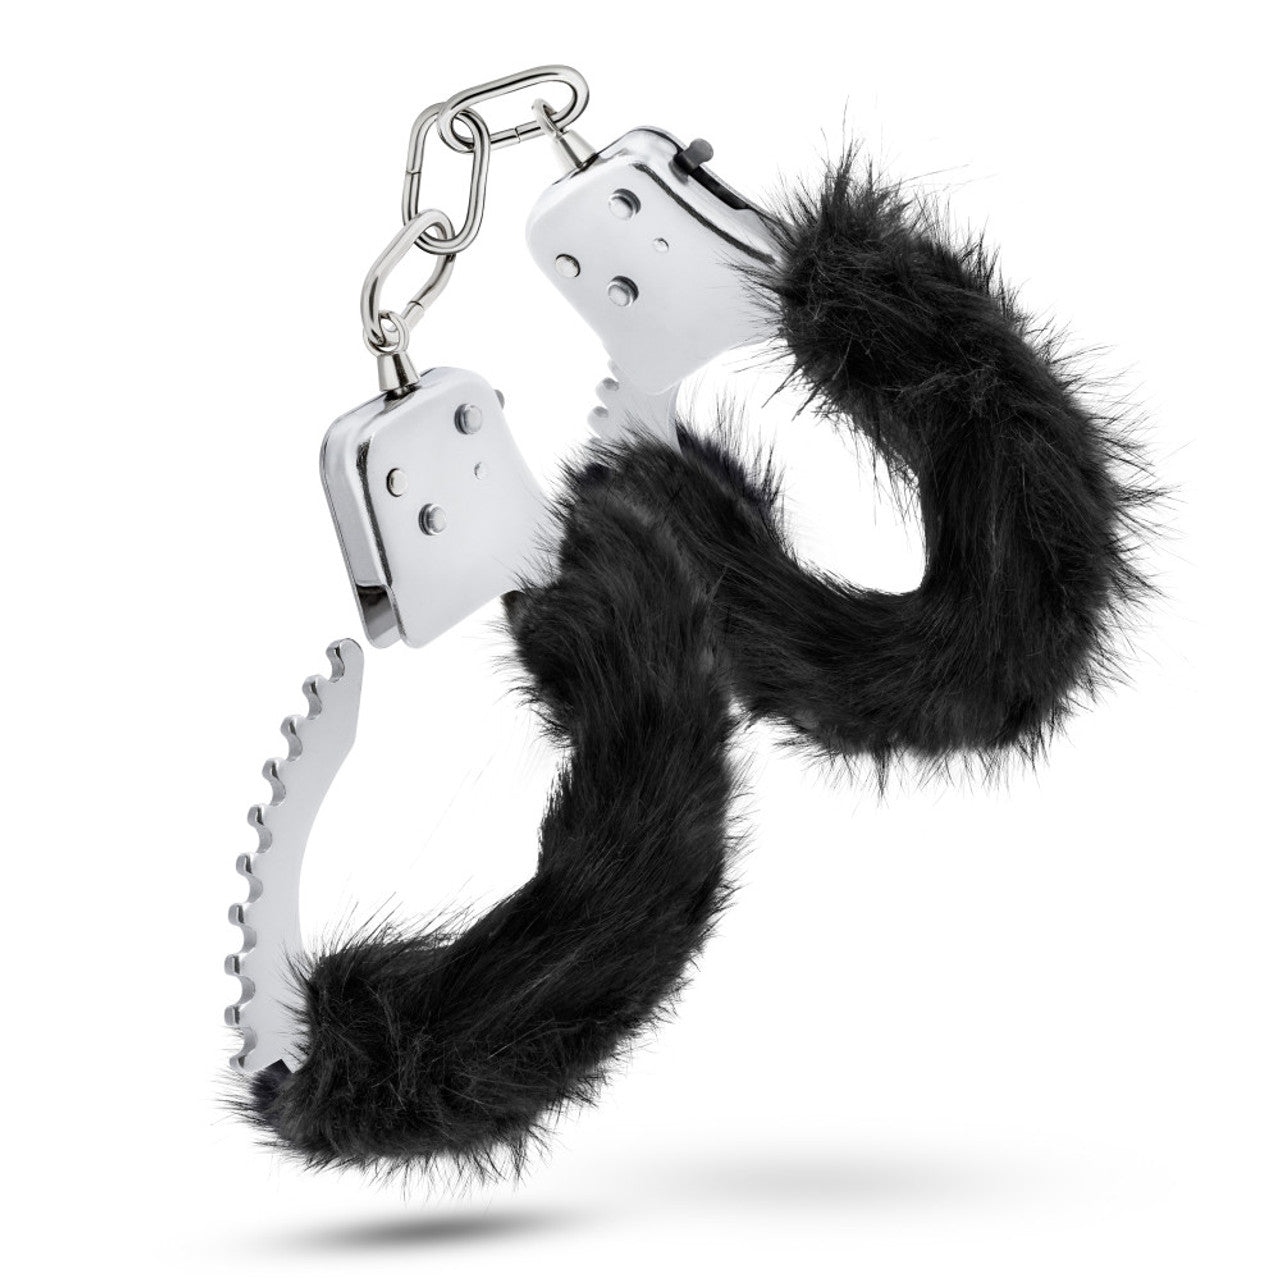 Temptasia Cuffs - Soft Fuzzy Handcuffs - Hamilton Park Electronics